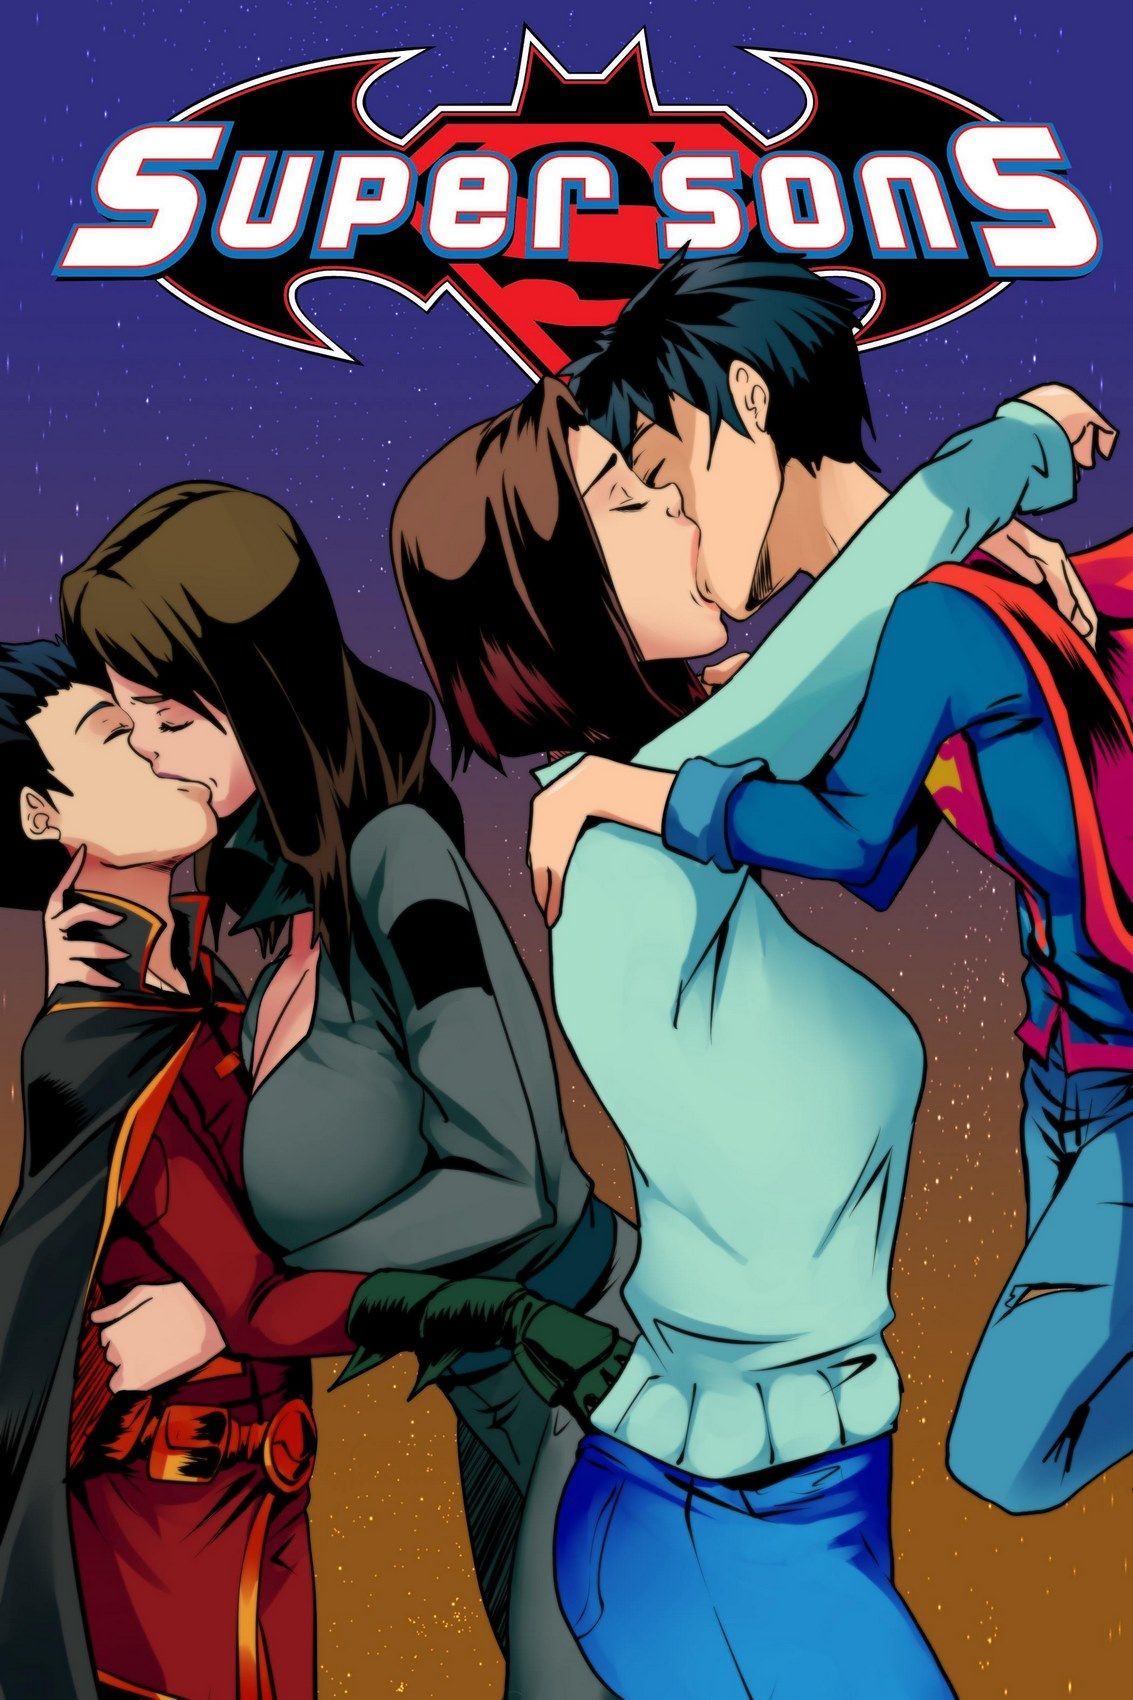 Super Sons - Justice League (Aya Yanagisawa) page 1